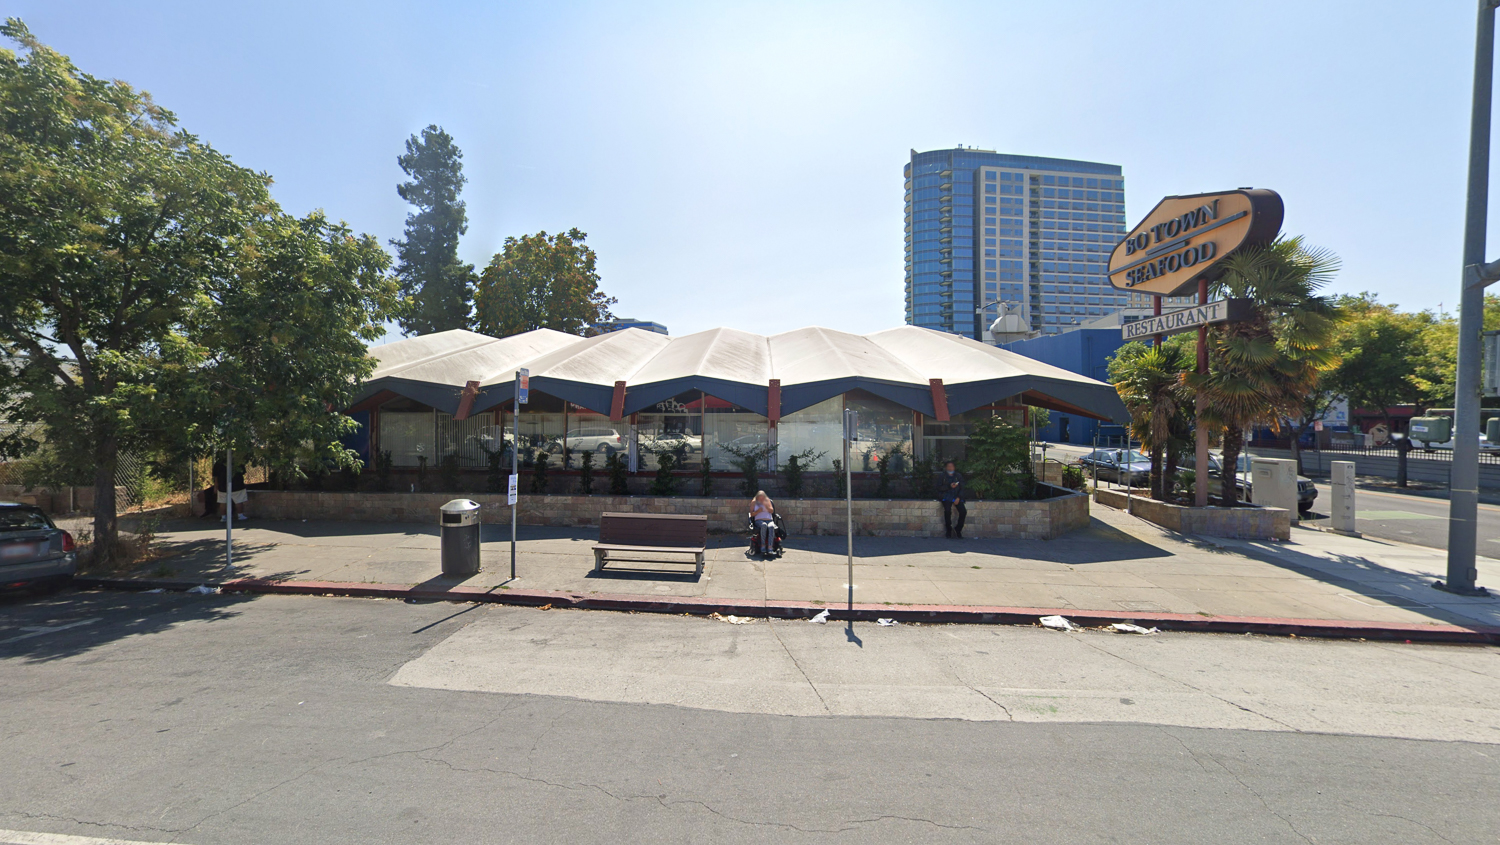 BoTown Restaurant at 409 South Second Street, image via Google Street View